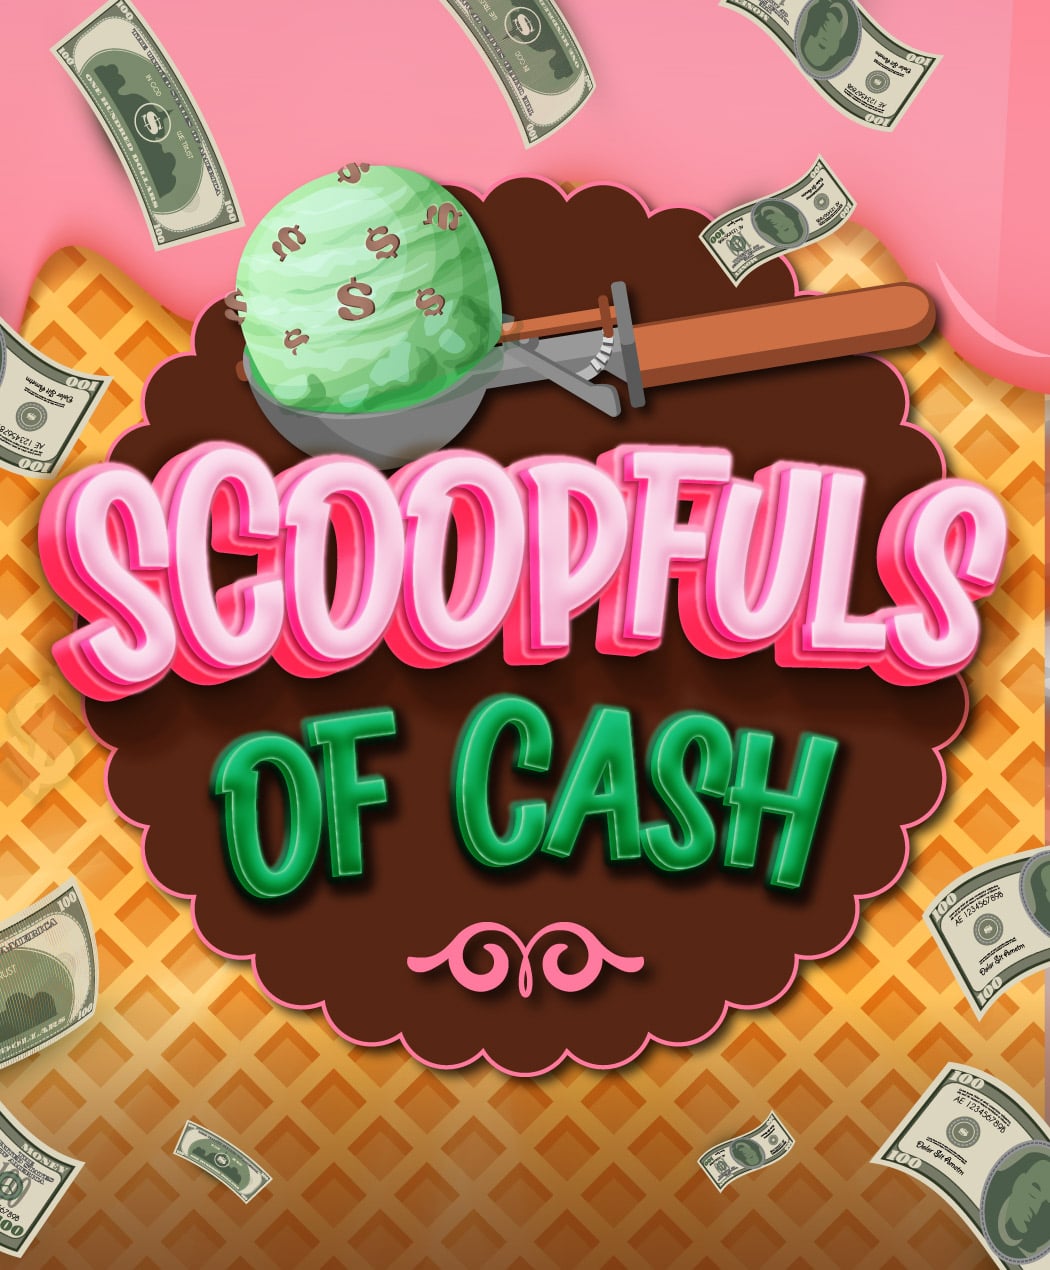 Scoopfuls of Cash